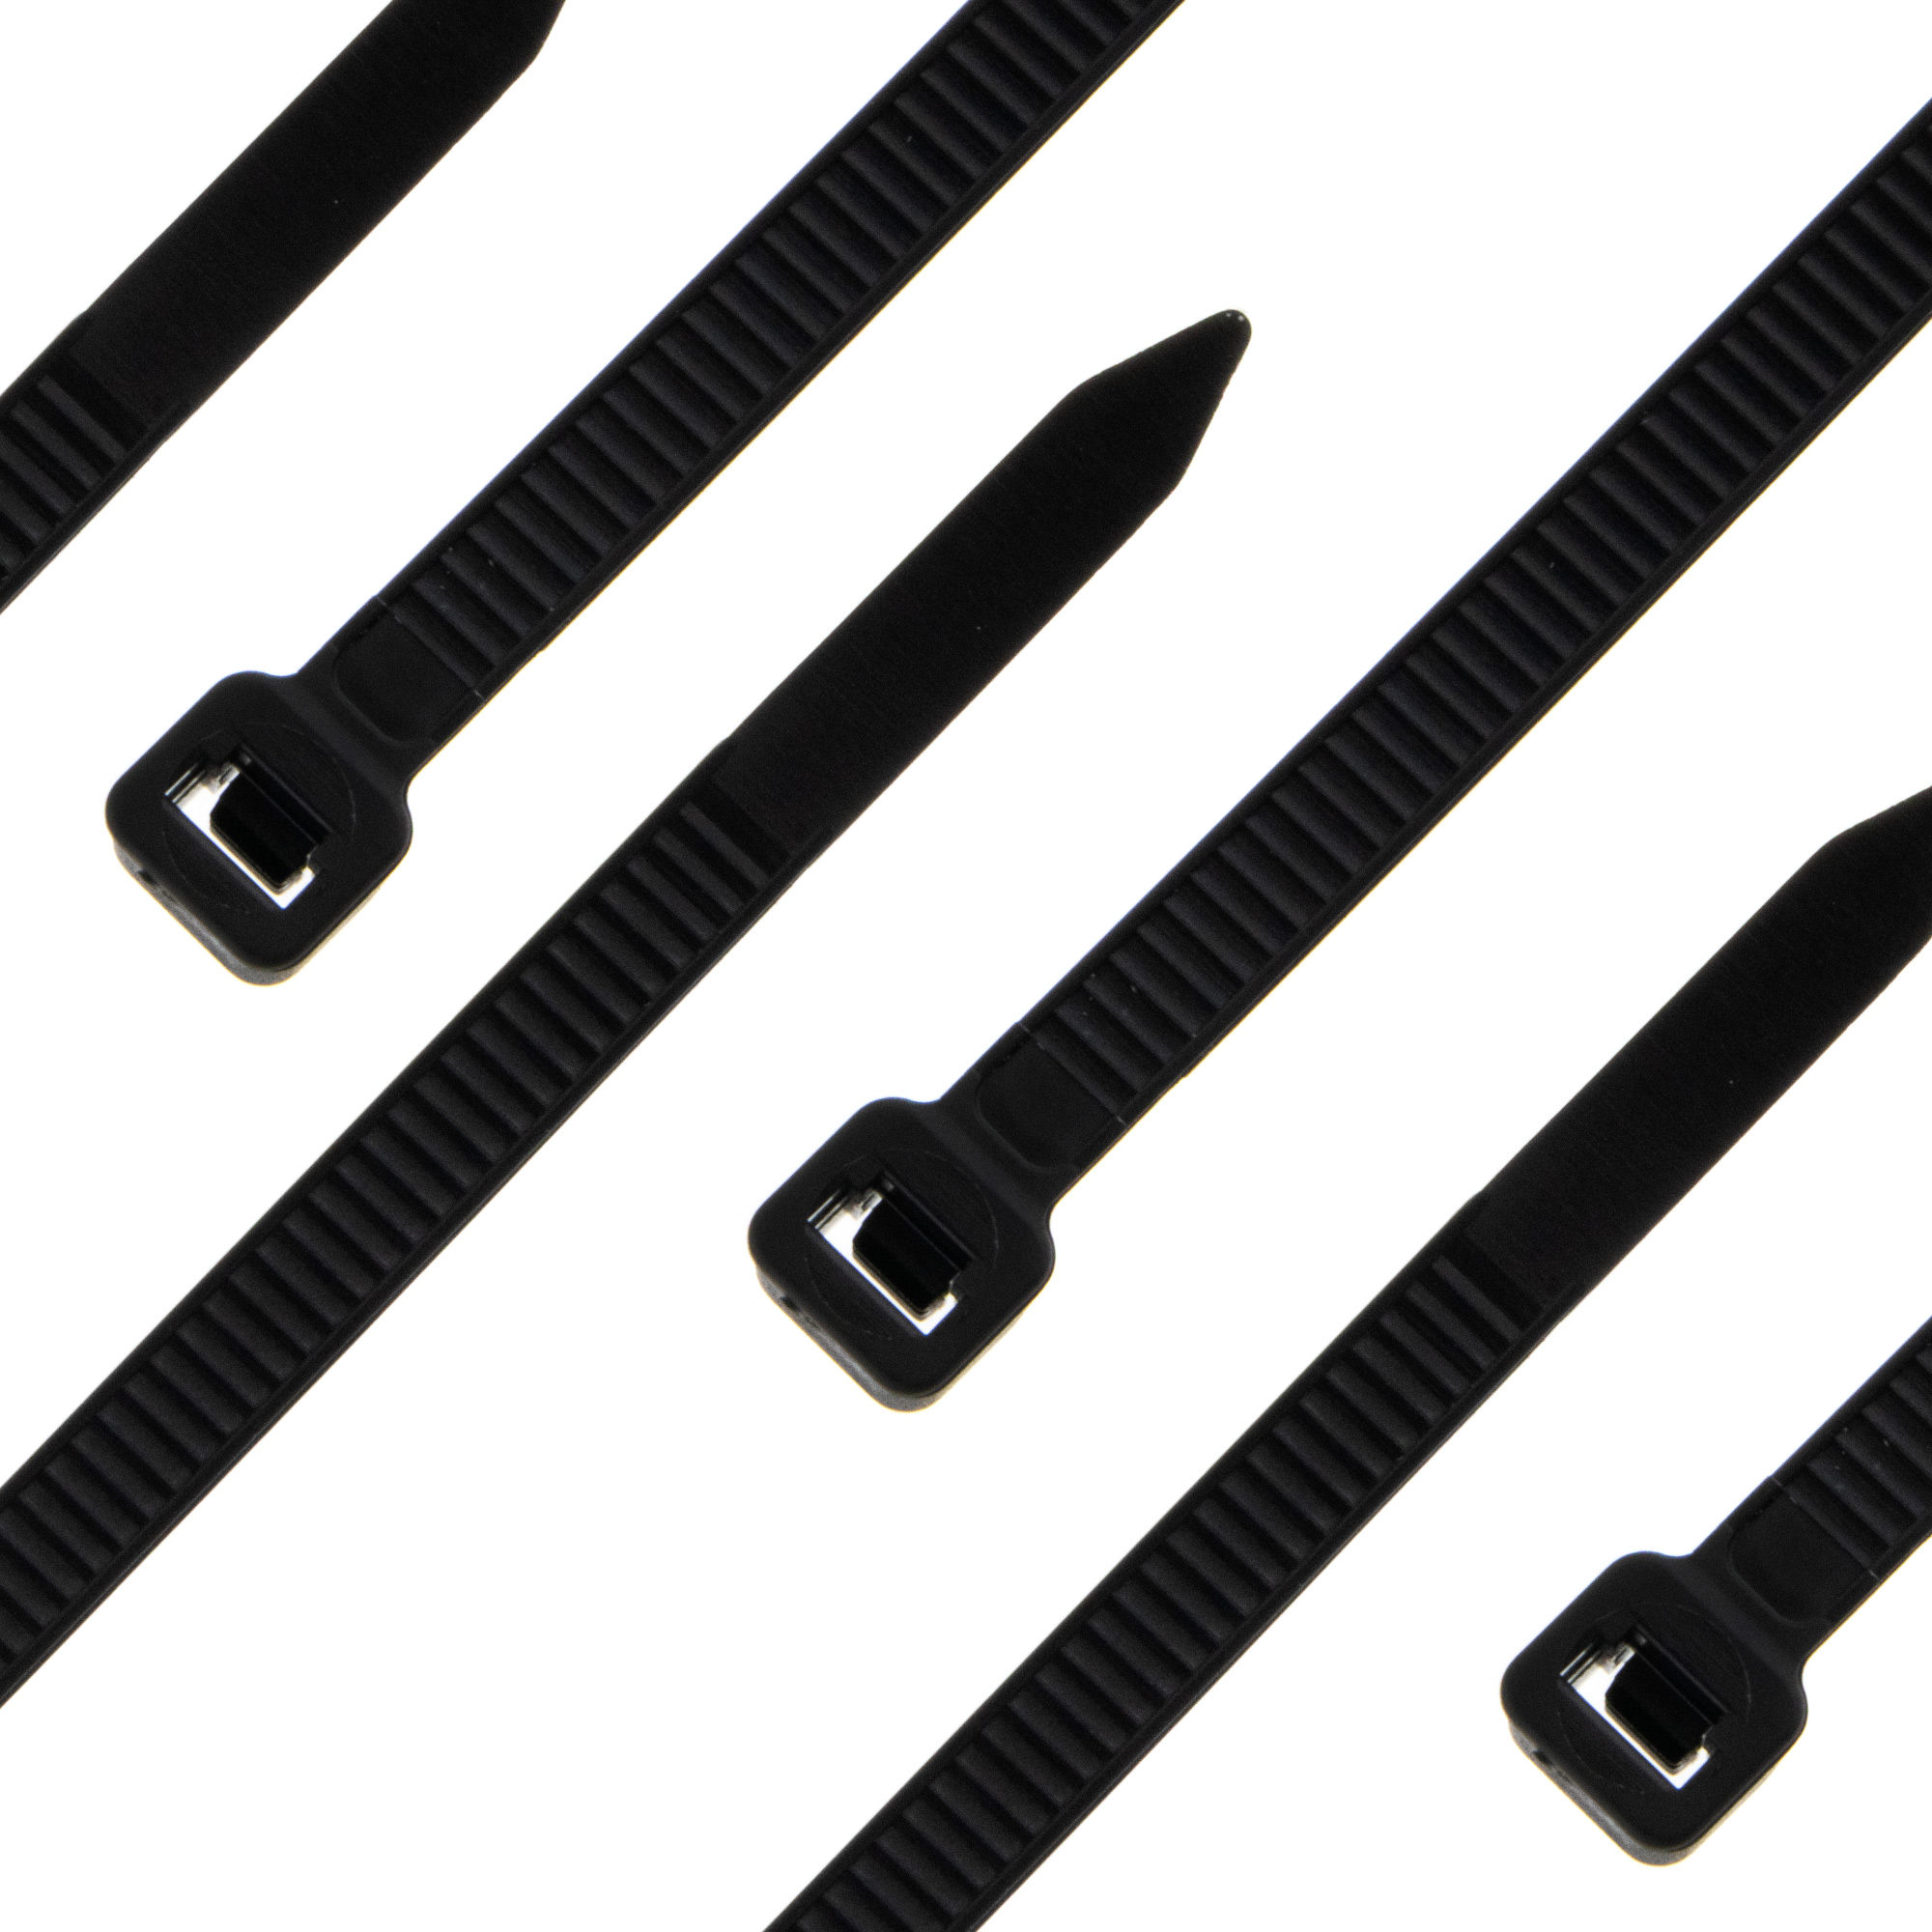 Cable tie self-locking 250 x 2,5mm, black, 100PCS